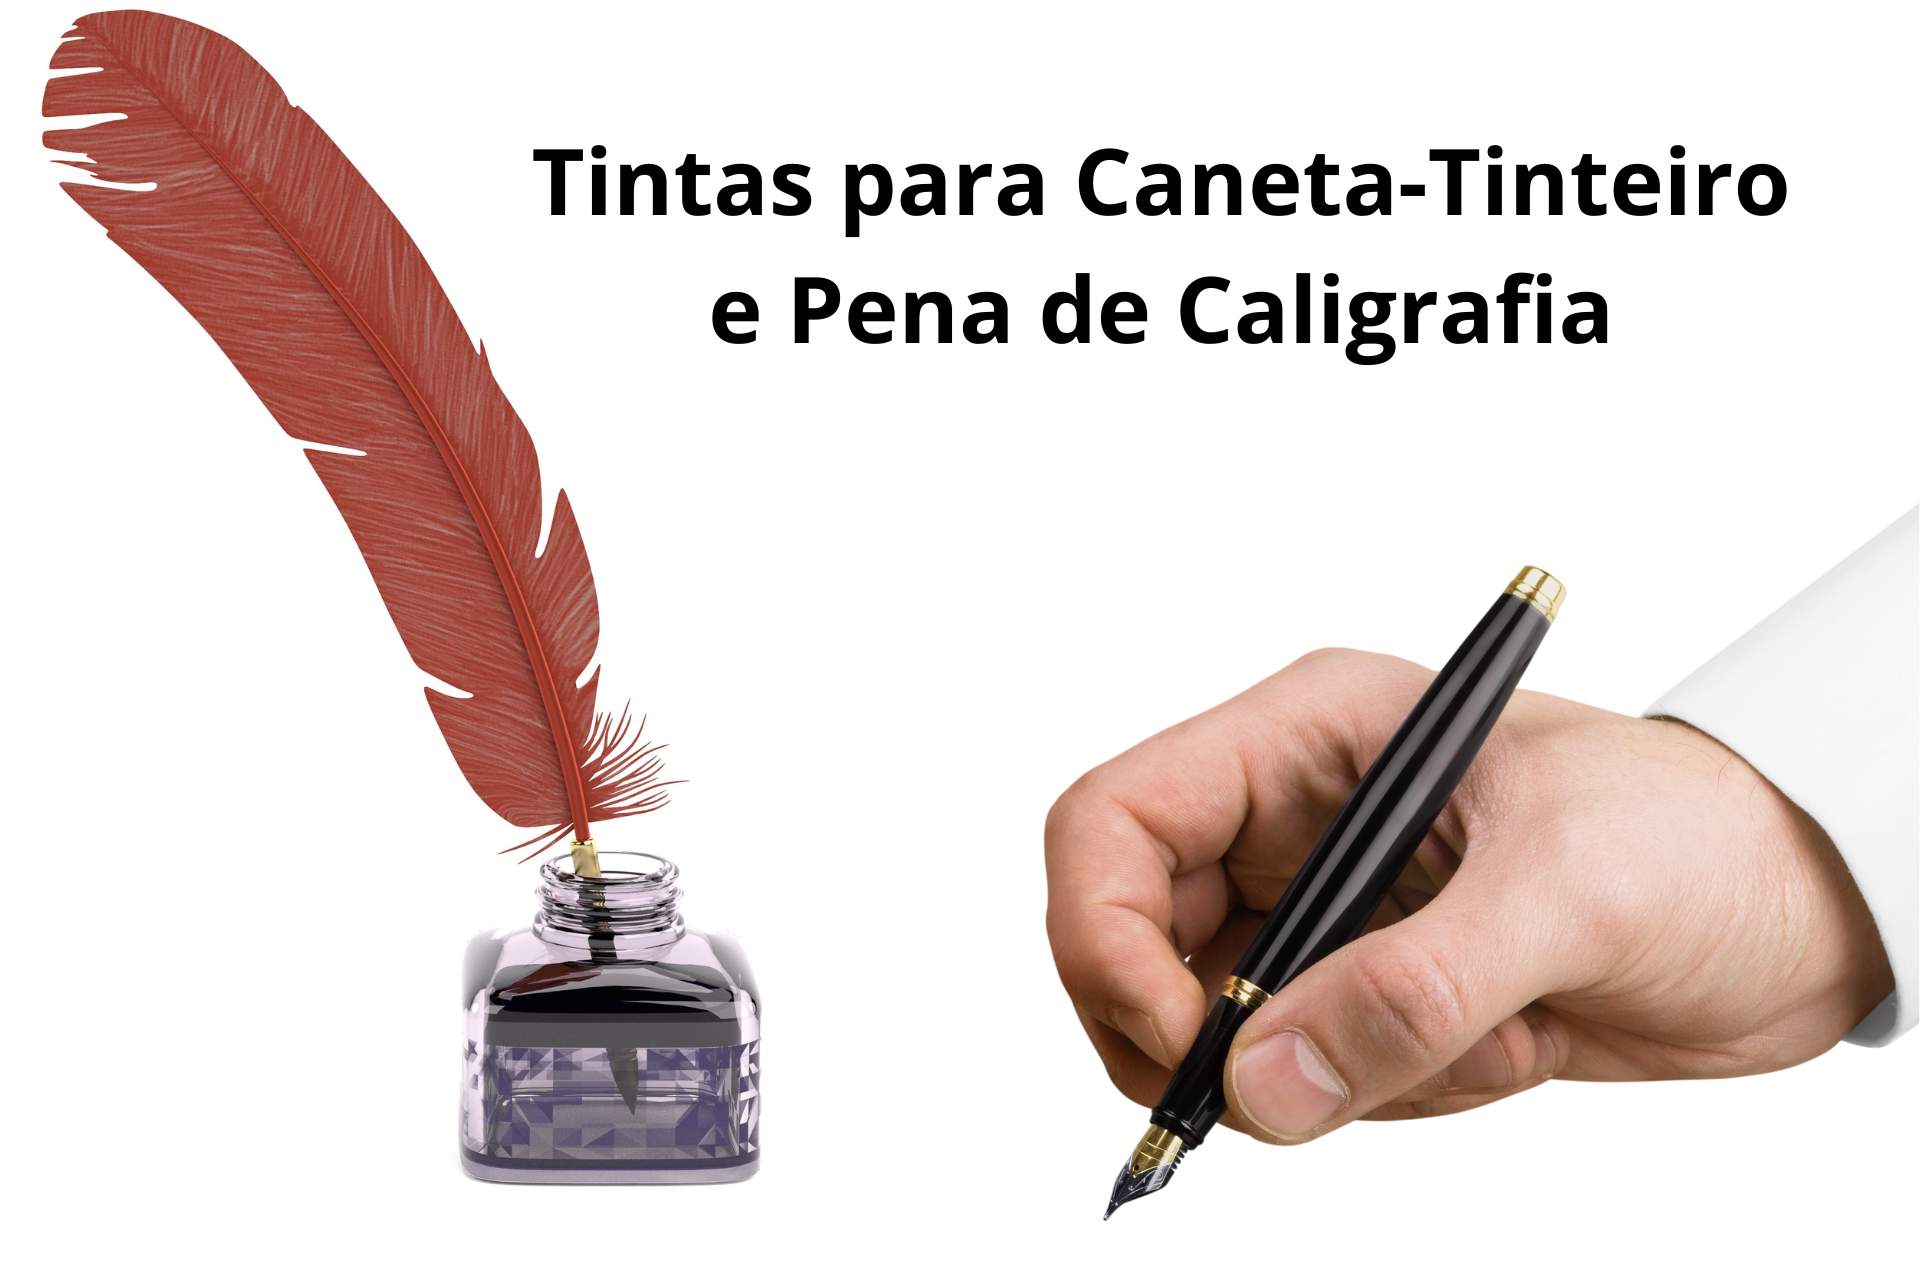 Tintas para Caneta-Tinteiro e Pena de Caligrafia